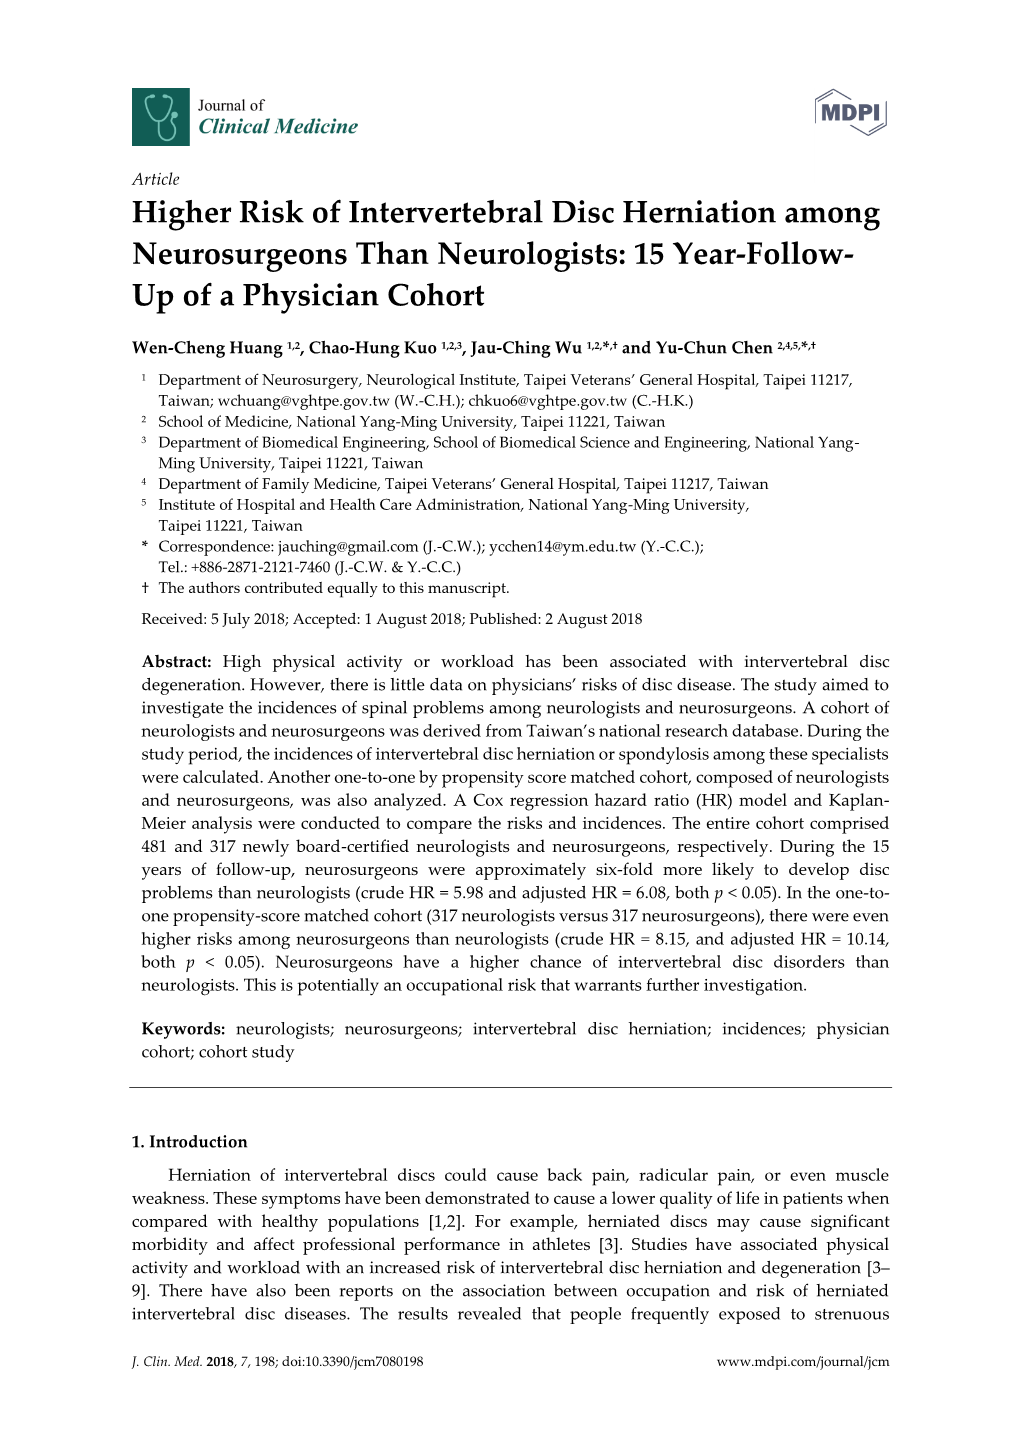 Higher Risk of Intervertebral Disc Herniation Among Neurosurgeons Than Neurologists: 15 Year-Follow- up of a Physician Cohort